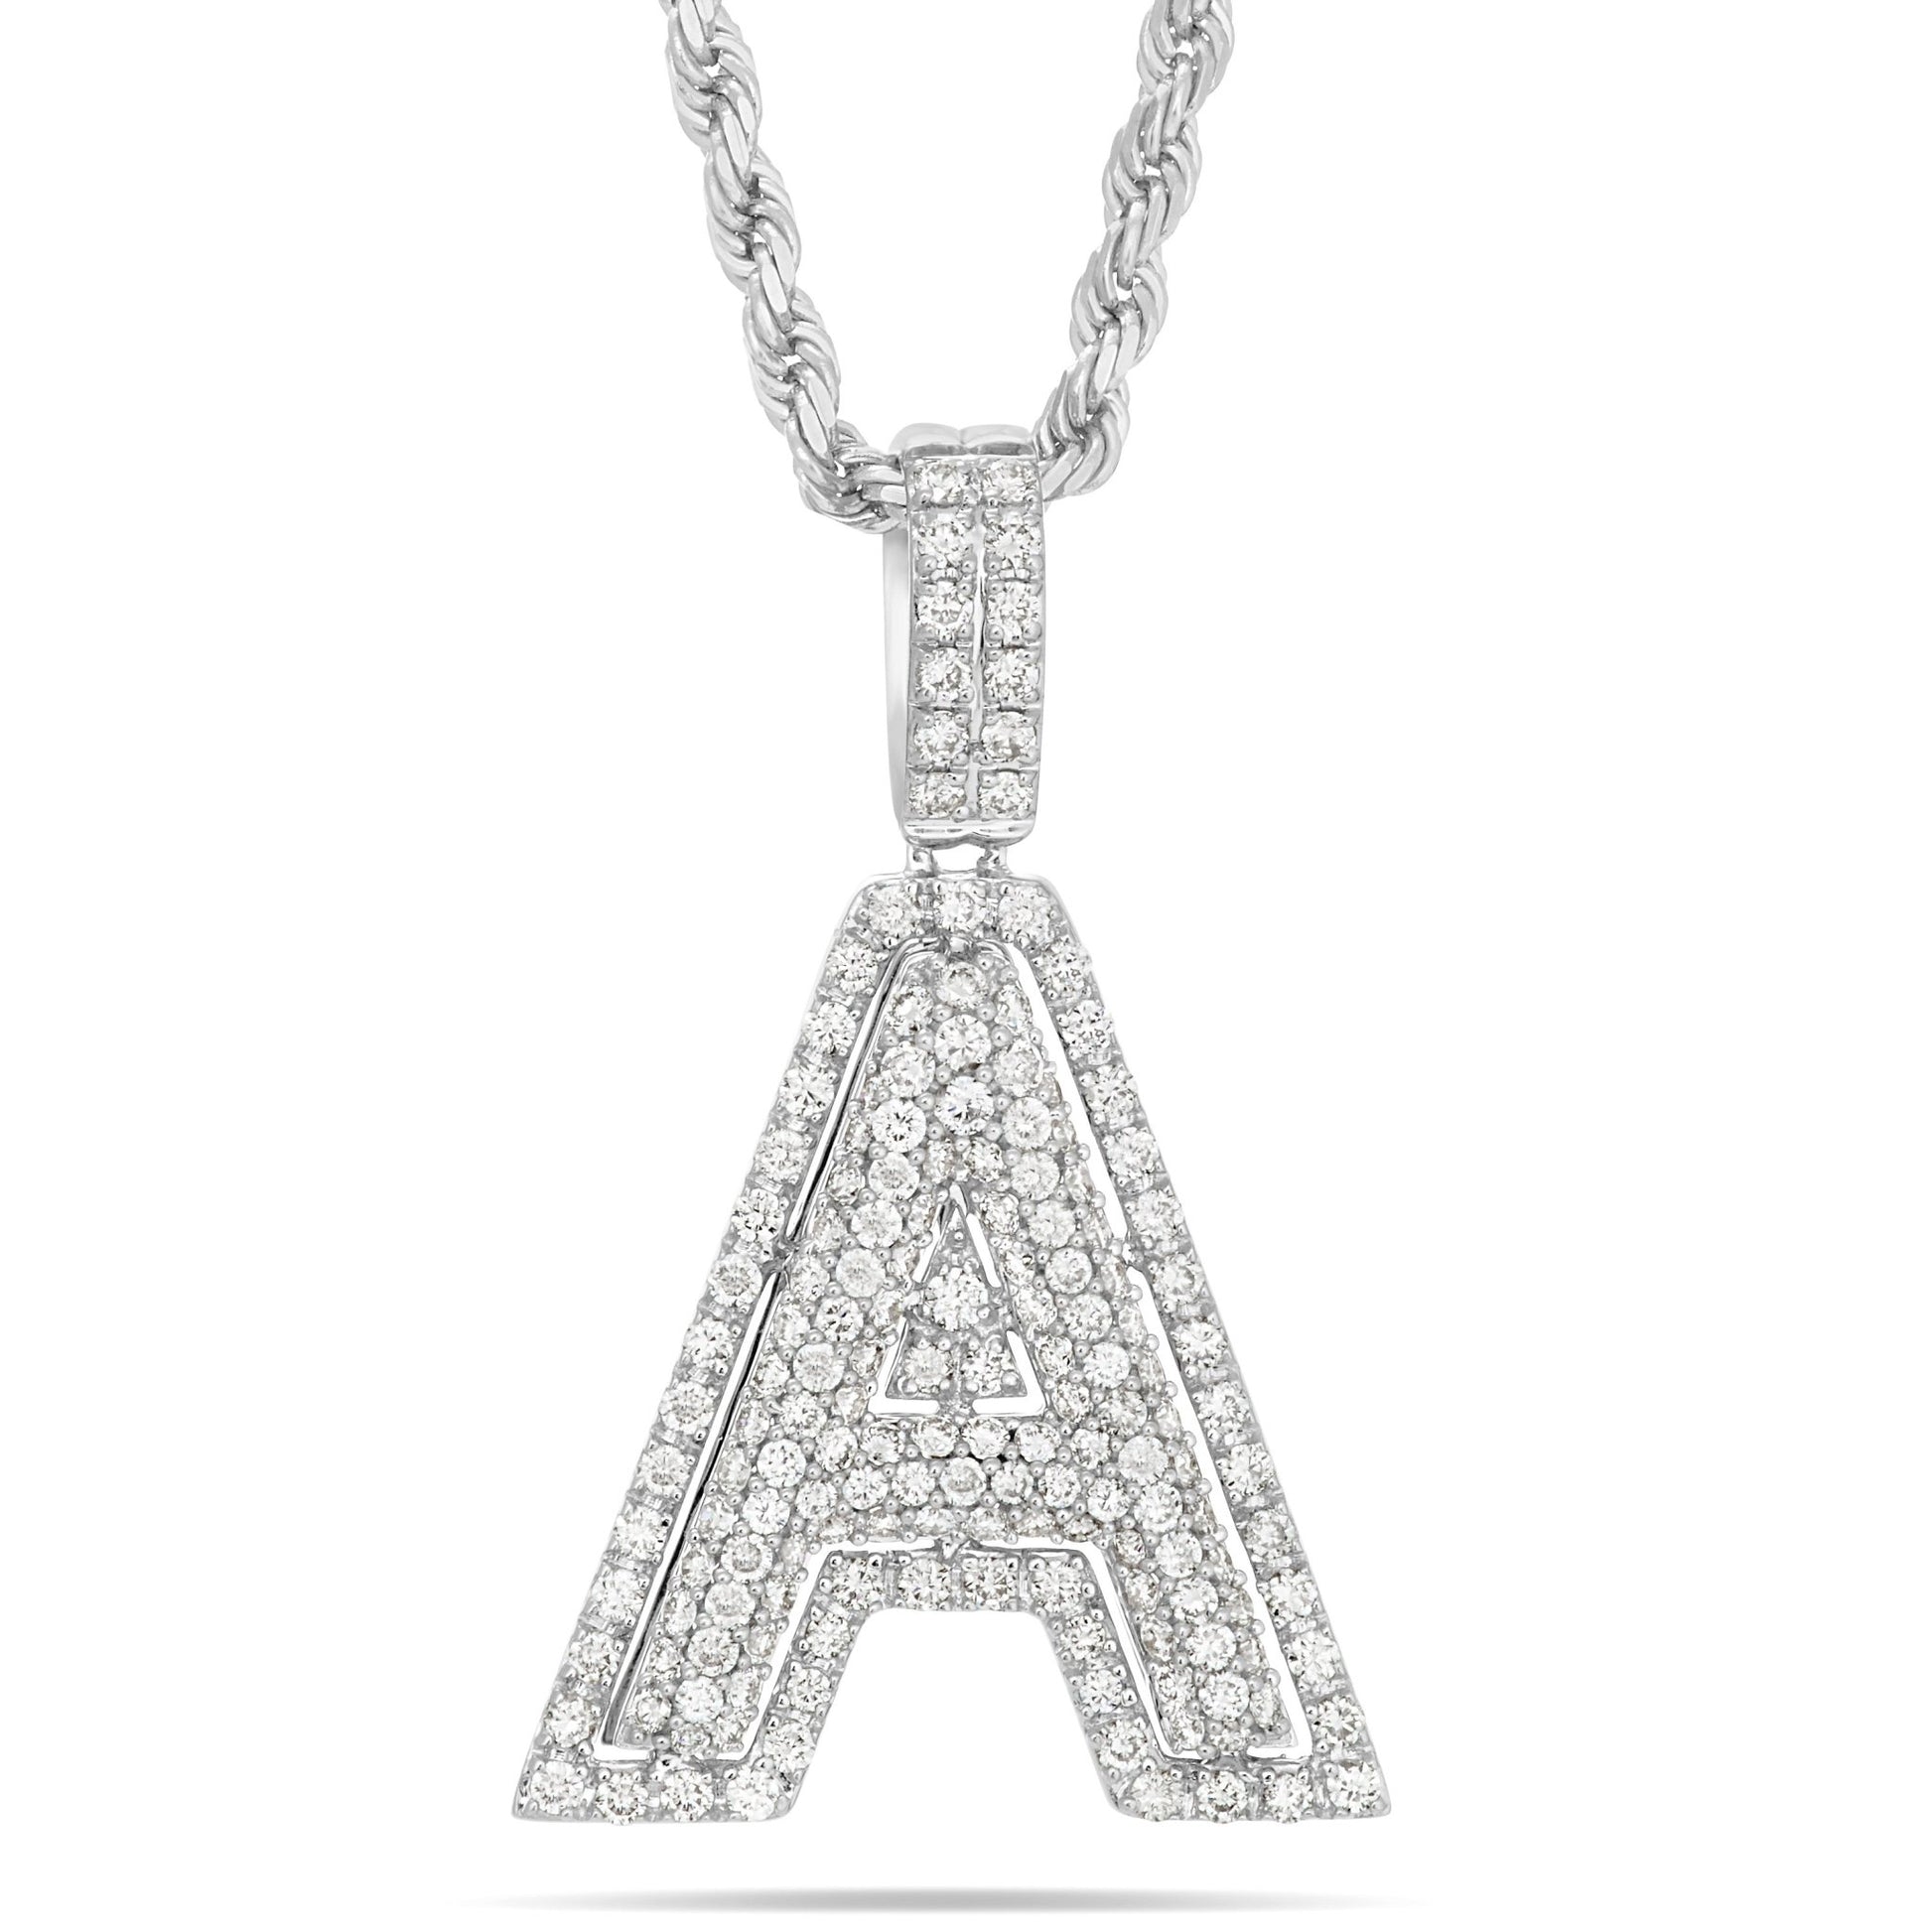 Bi-level Diamond Initial Pendant - Shyne Jewelers White Gold A Shyne Jewelers